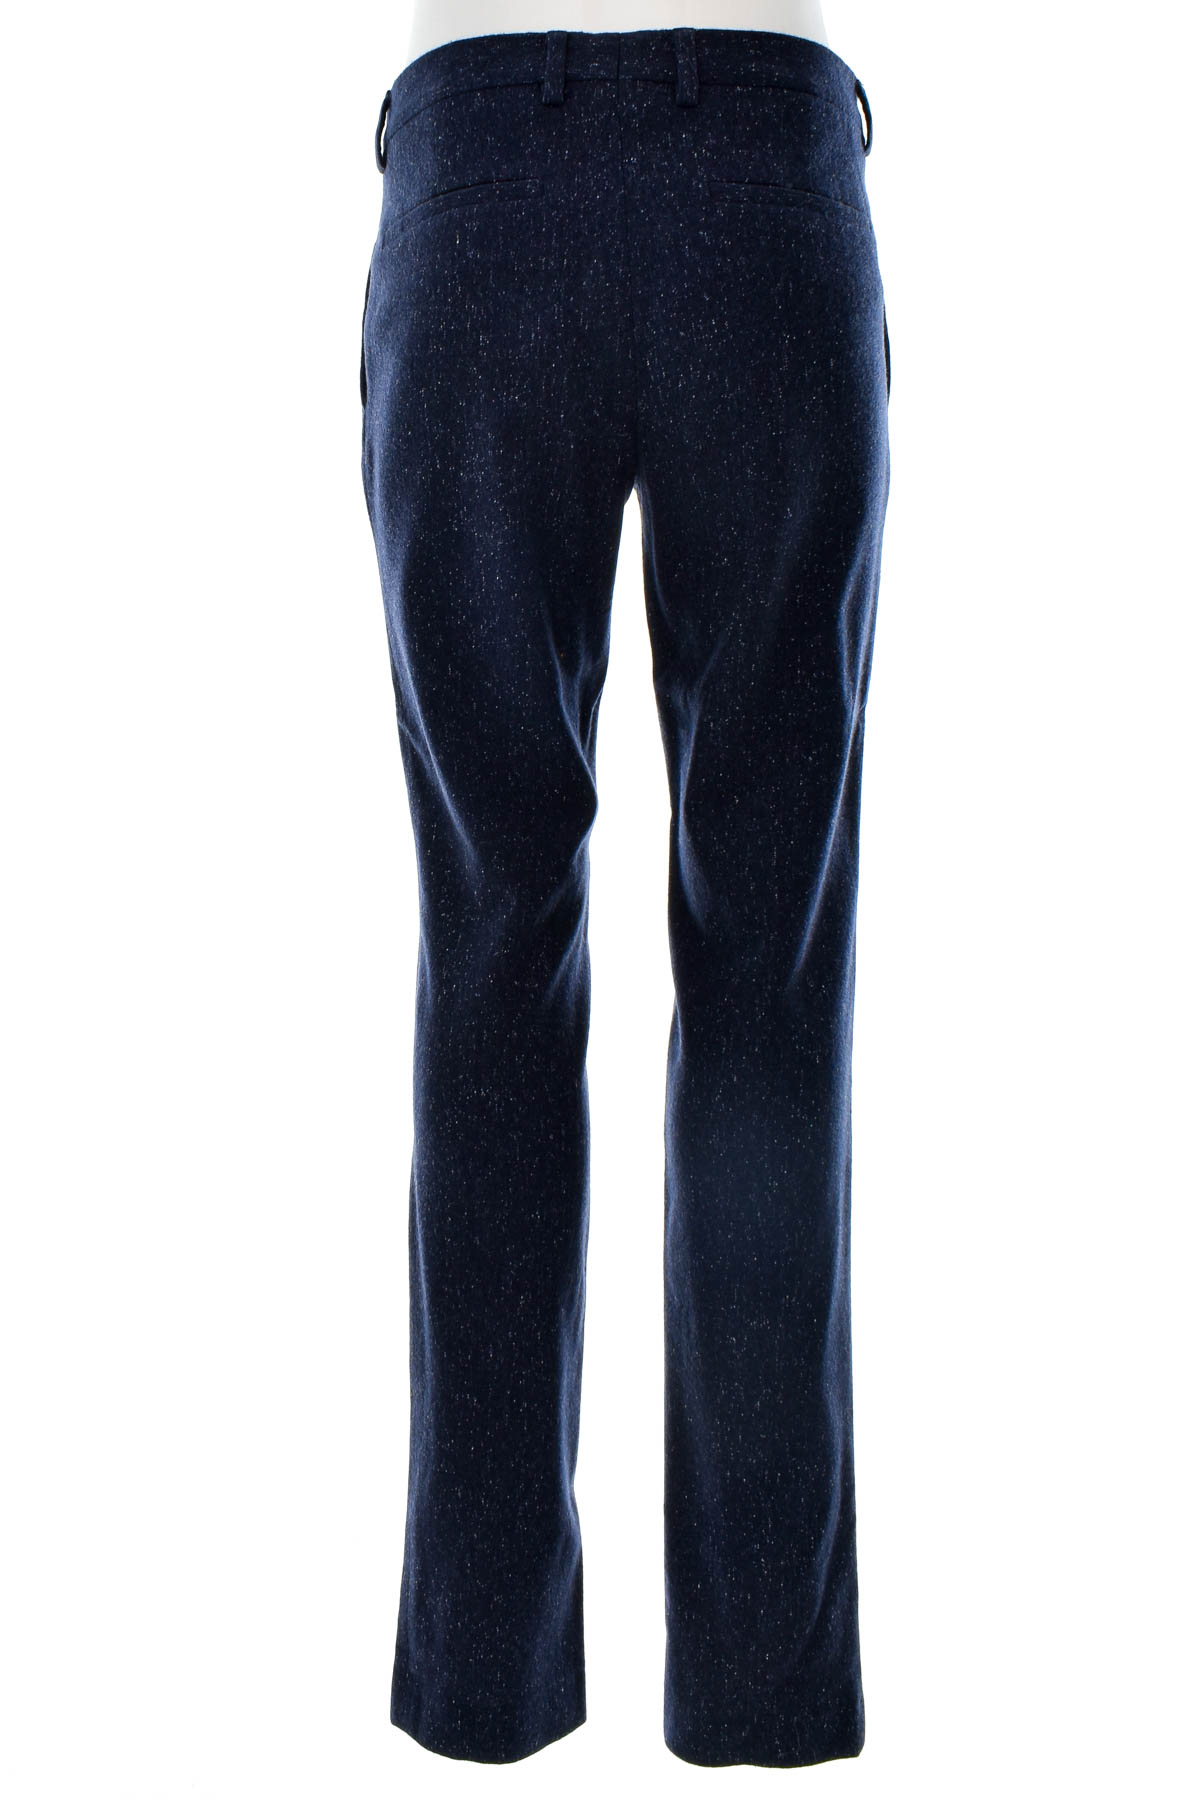 Men's trousers - ZARA Man - 1